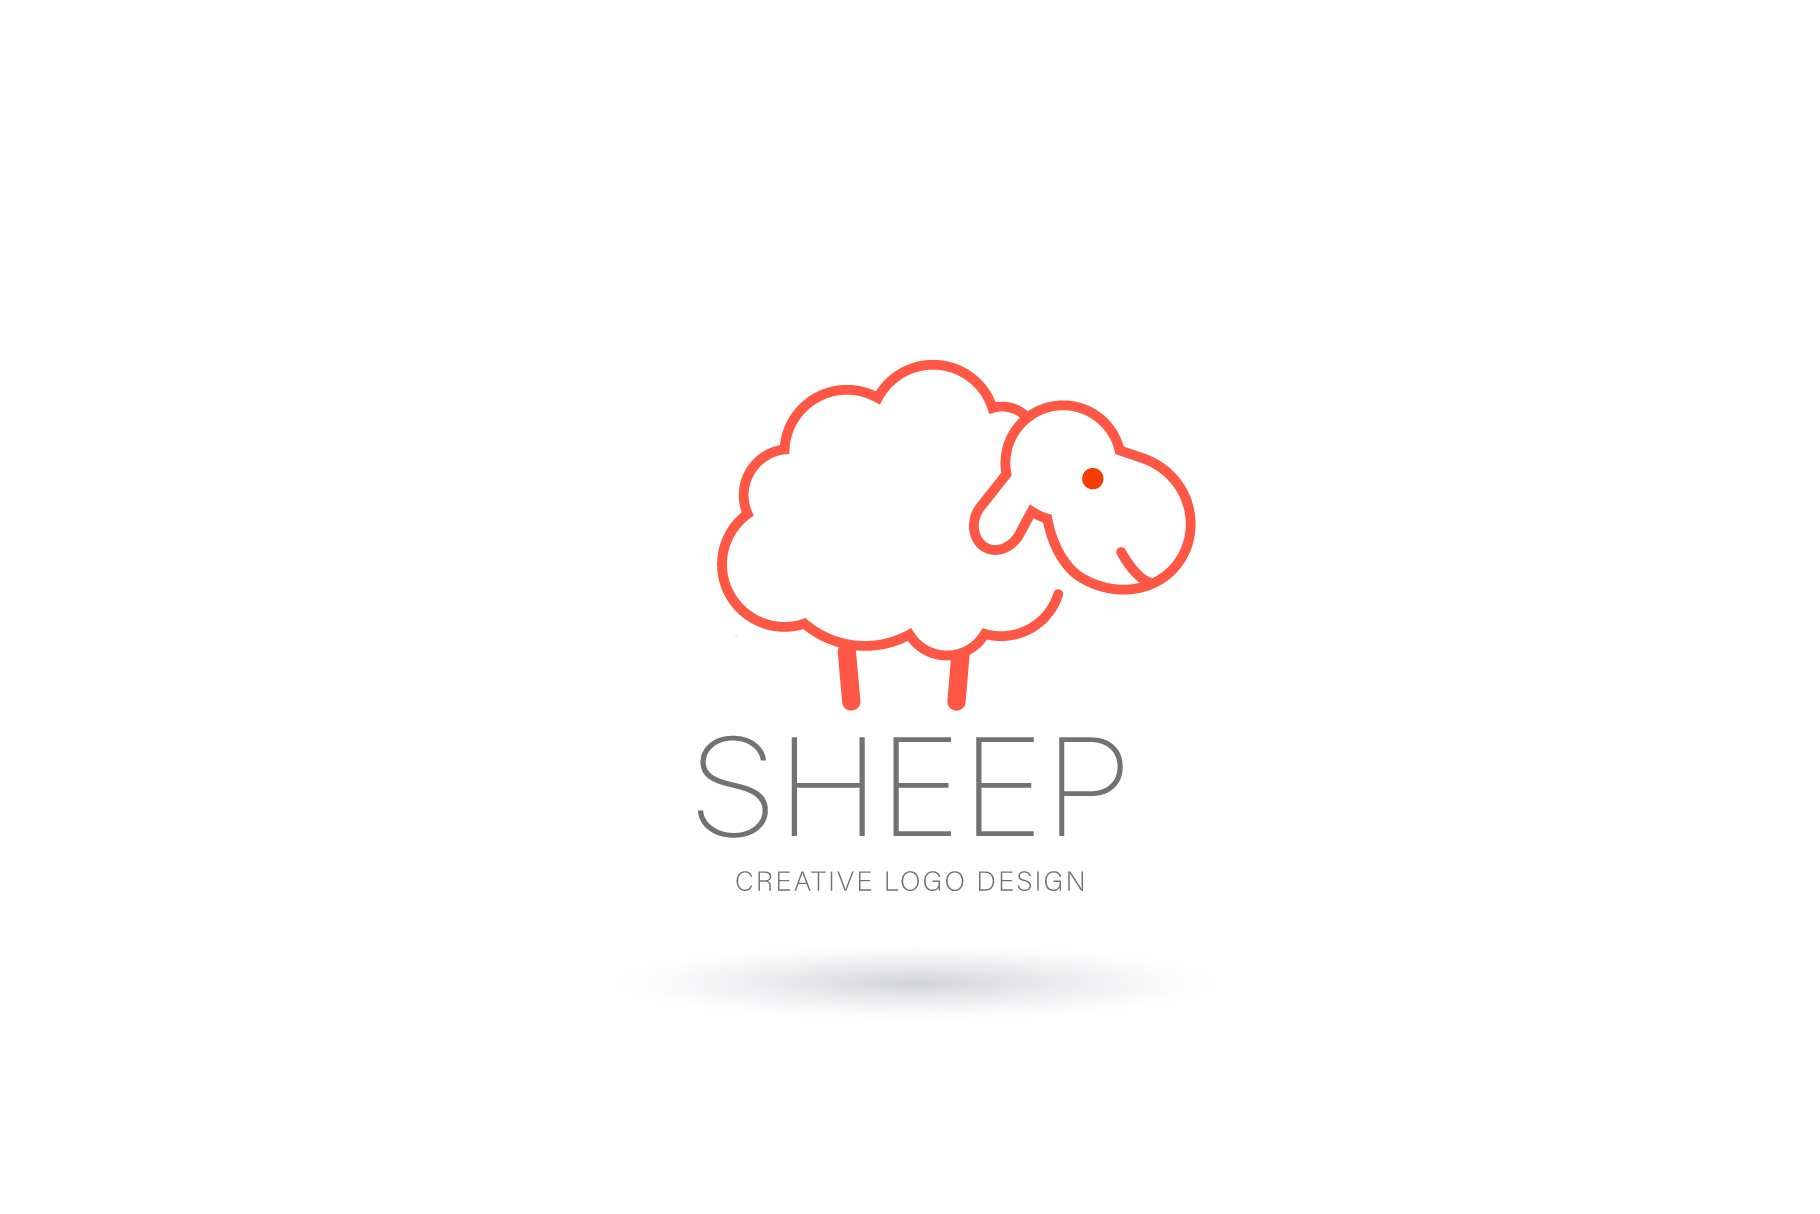 Sheep logo cover image.